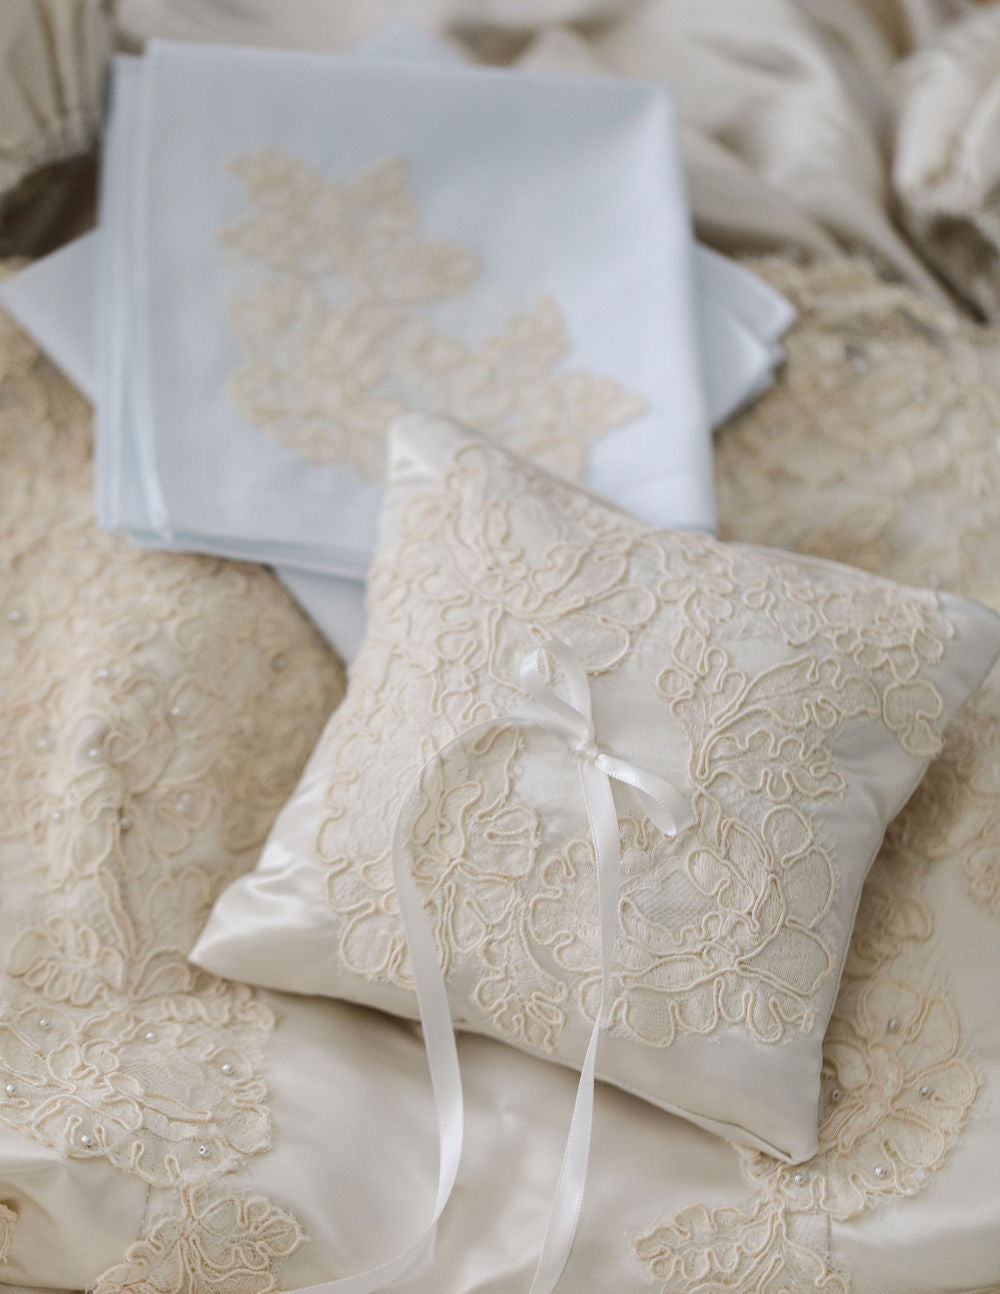 custom wedding garter heirloom and ring pillow made from grandmother's wedding dress by The Garter Girl